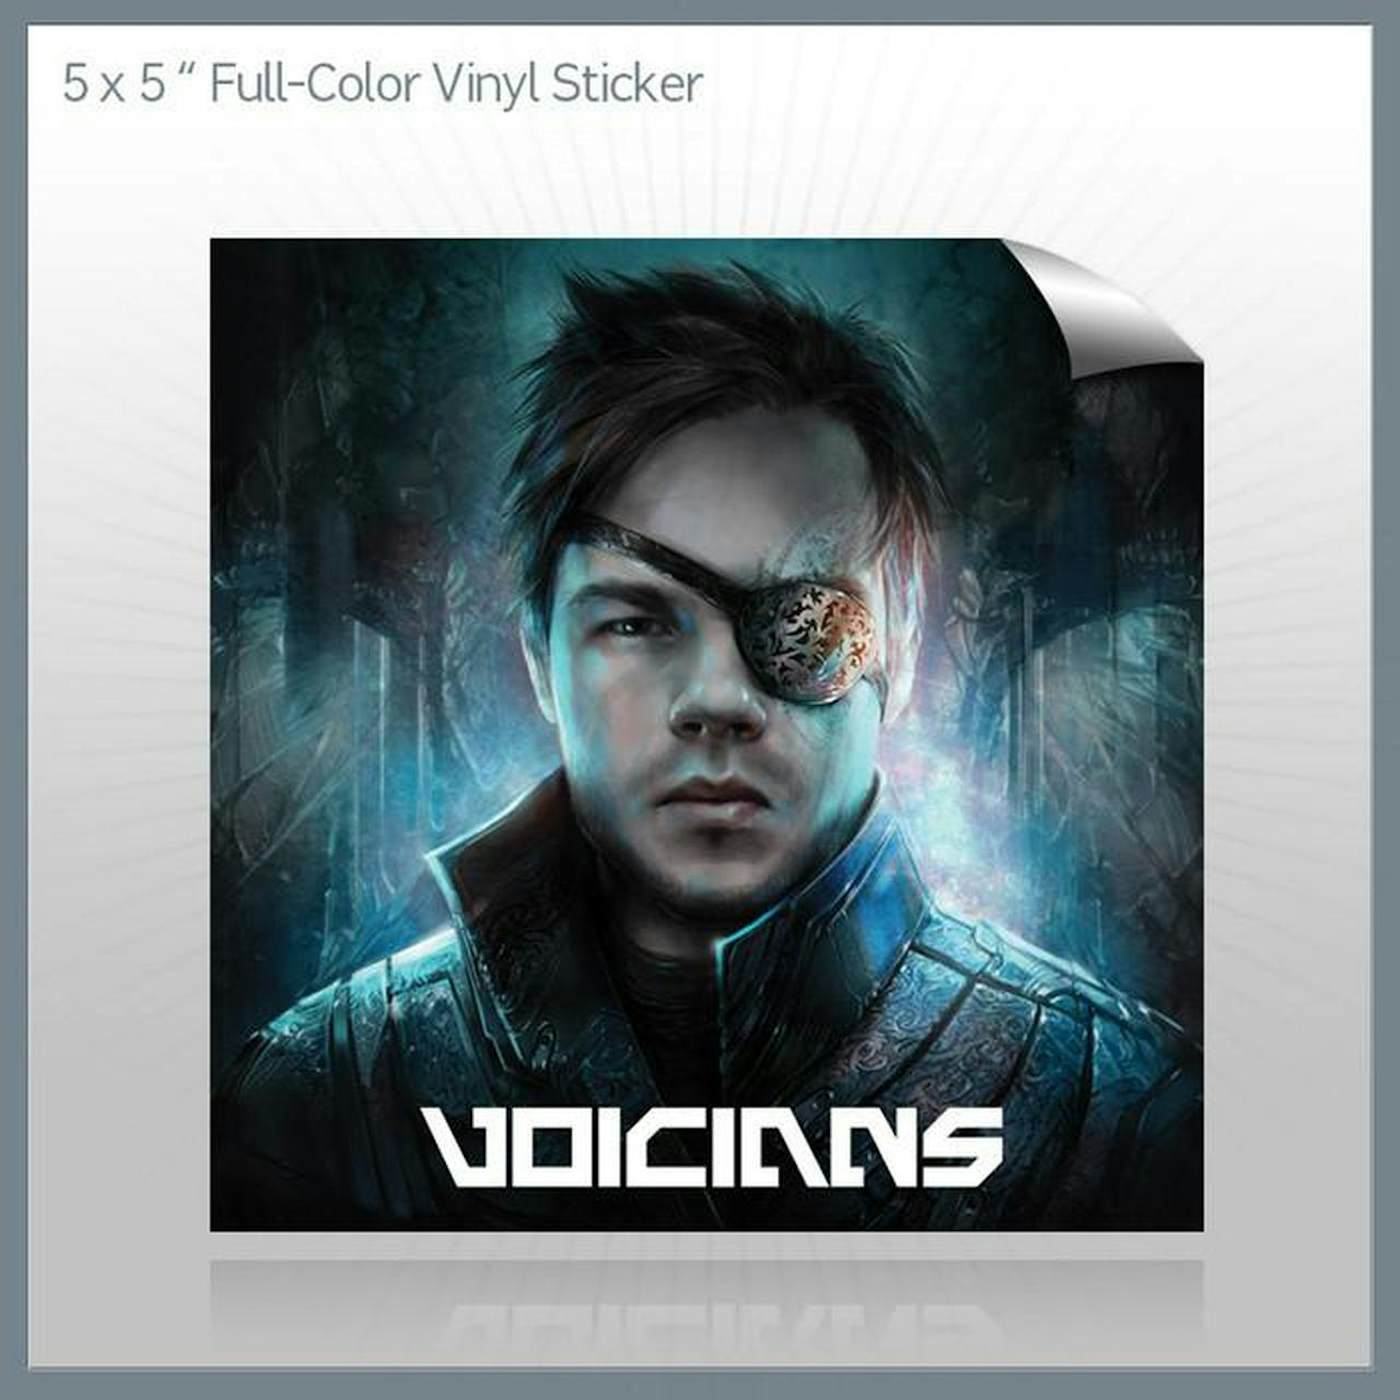 Voicians - 5x5 full Color Vinyl Sticker